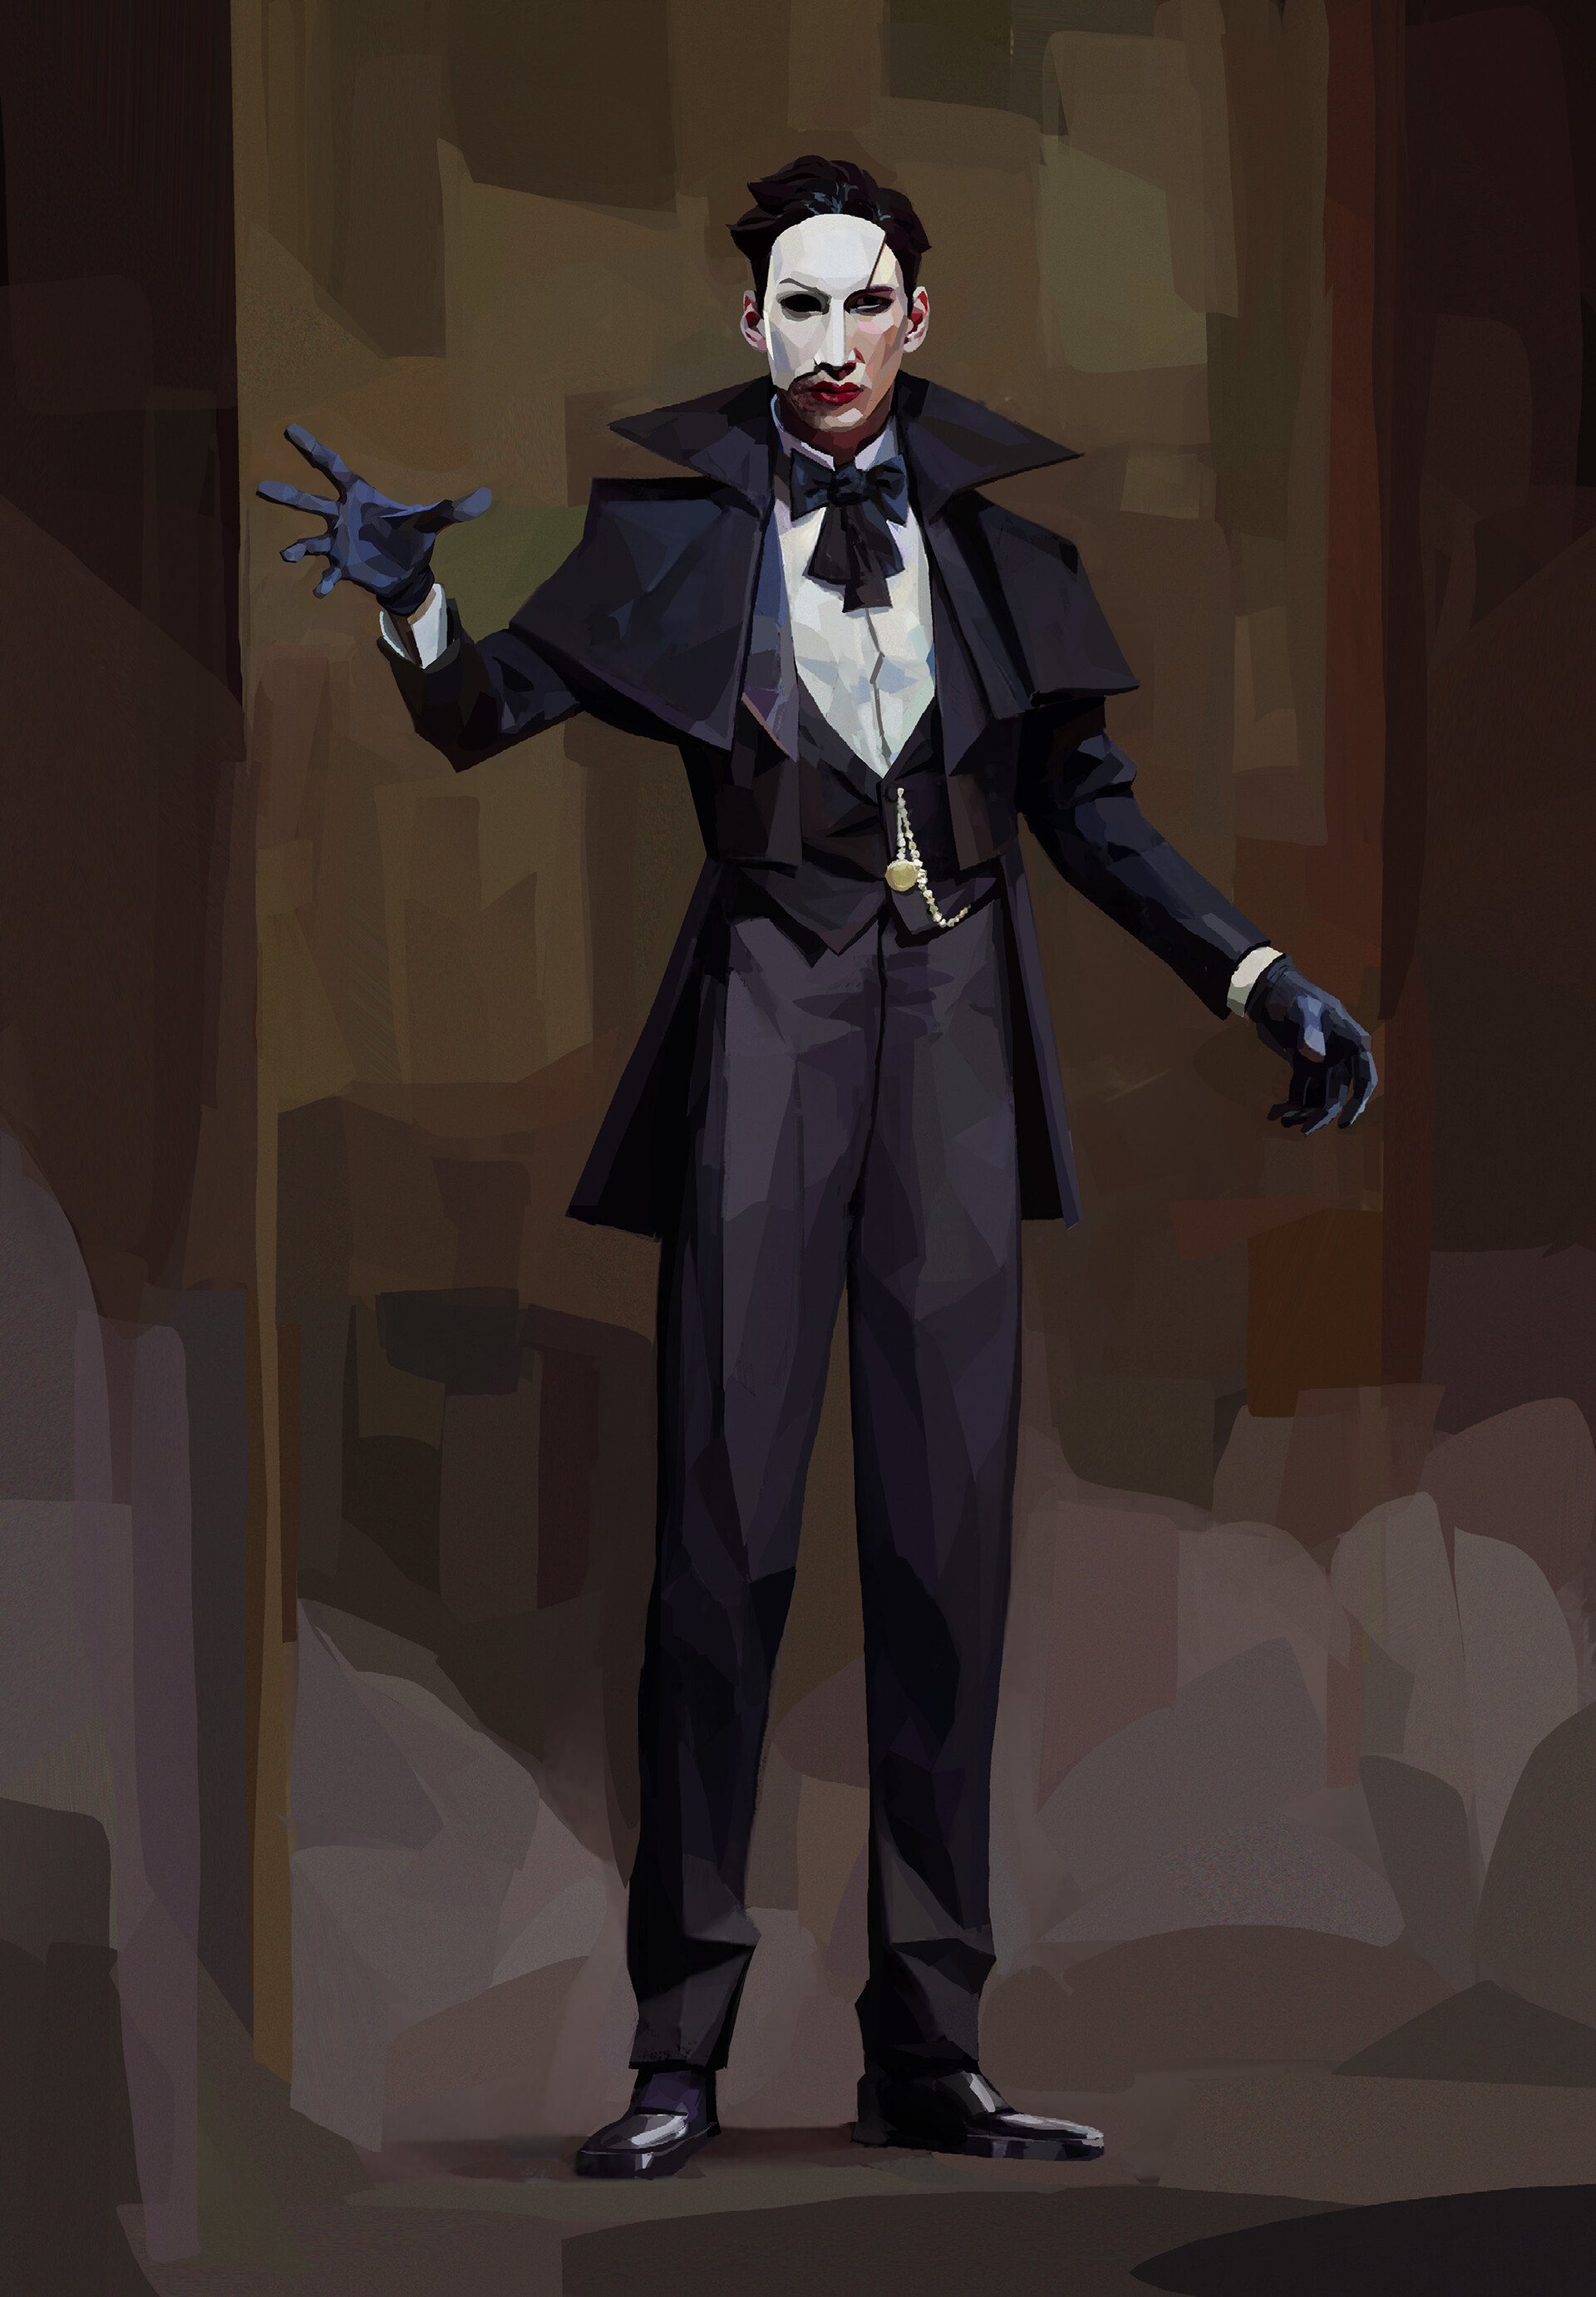 Phantom of the Opera  The Opinionated Gamers